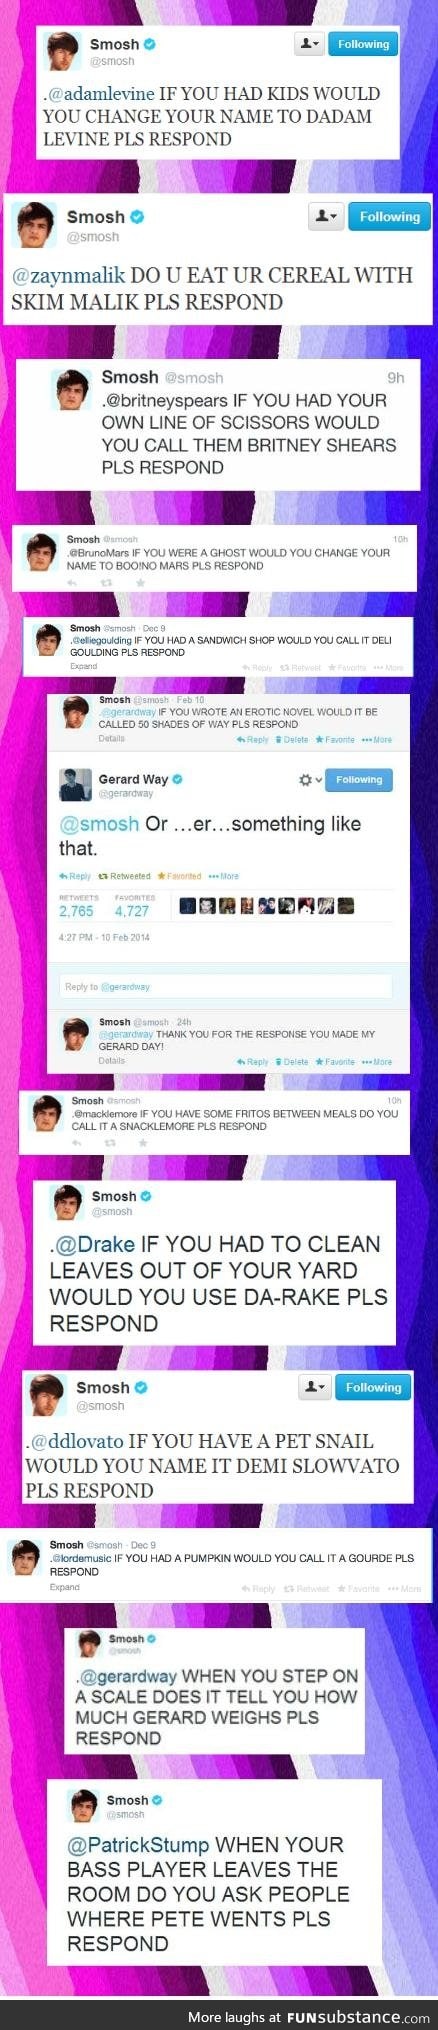 Smosh Celebrity Tweet Comp